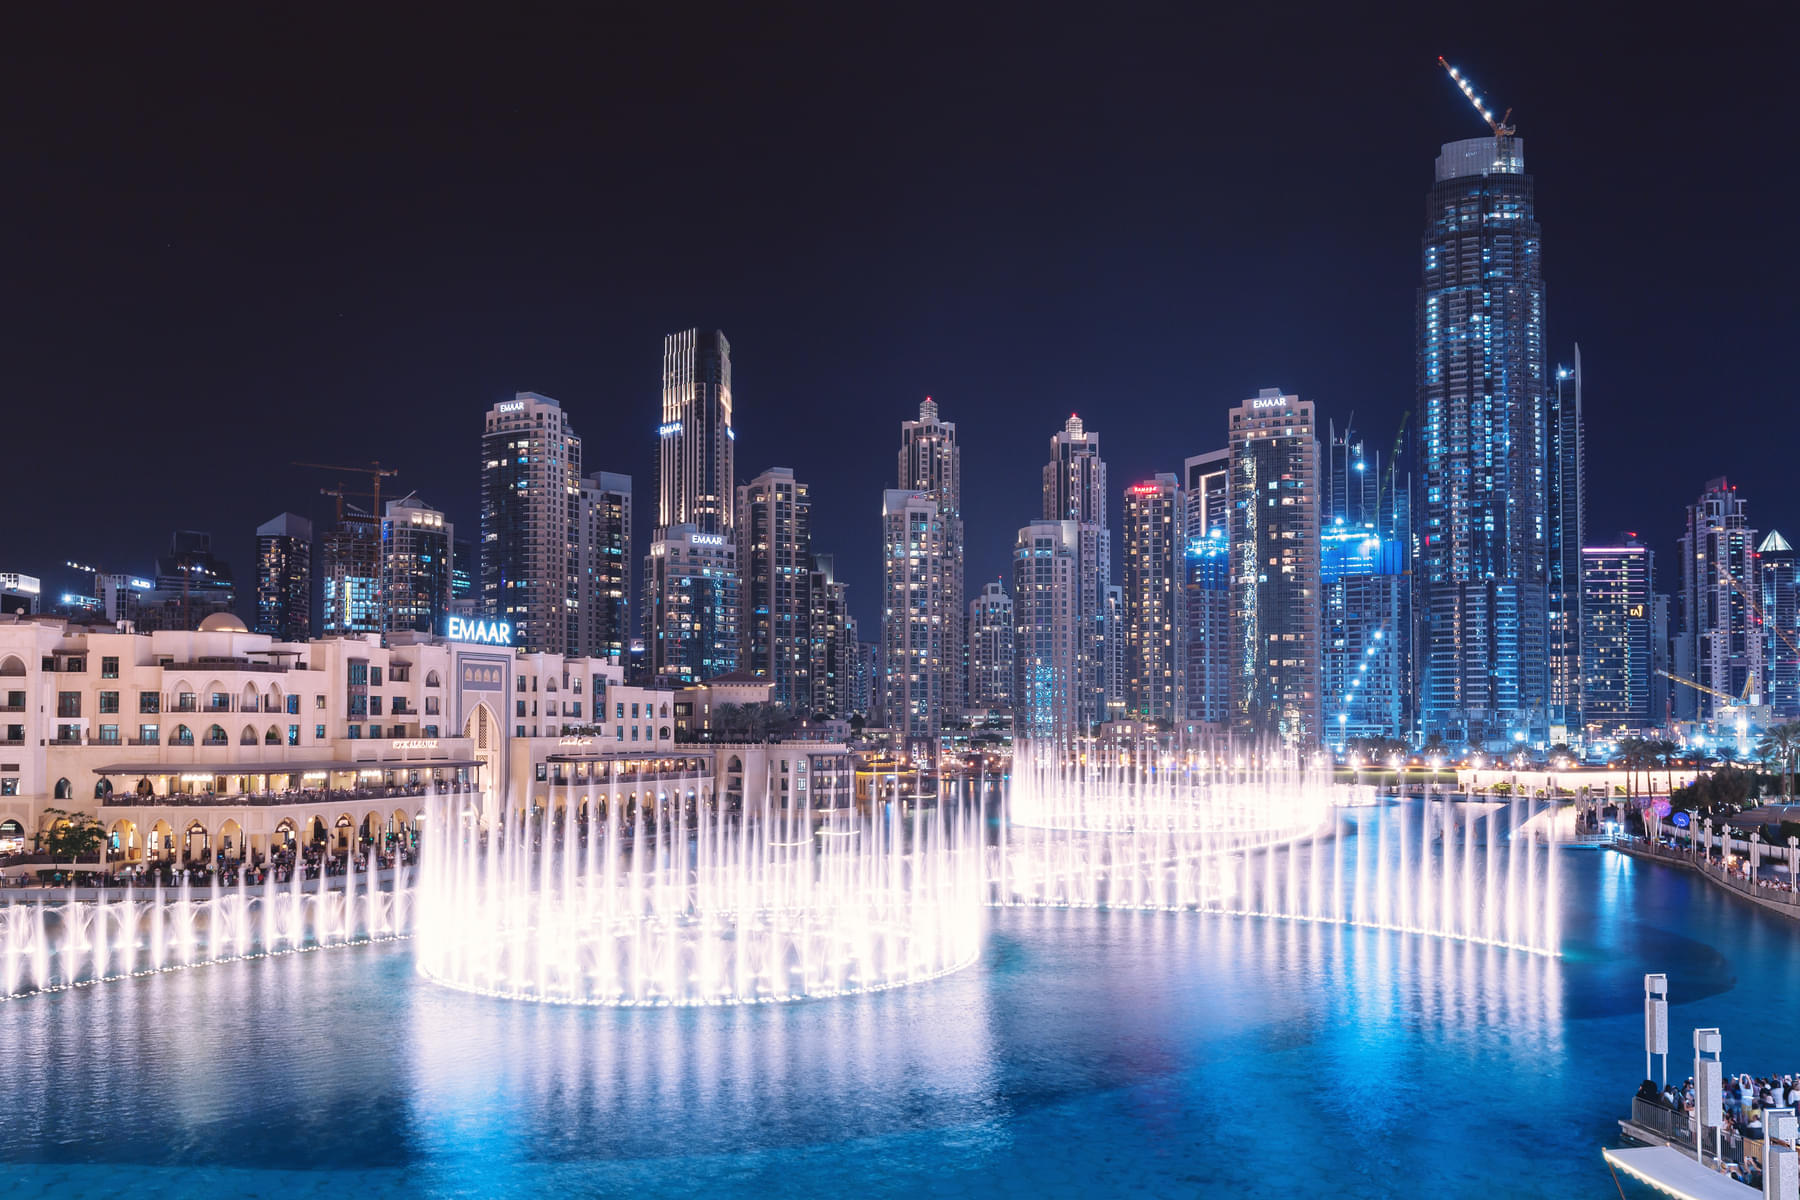 Take a look at the magic of the Dubai fountain